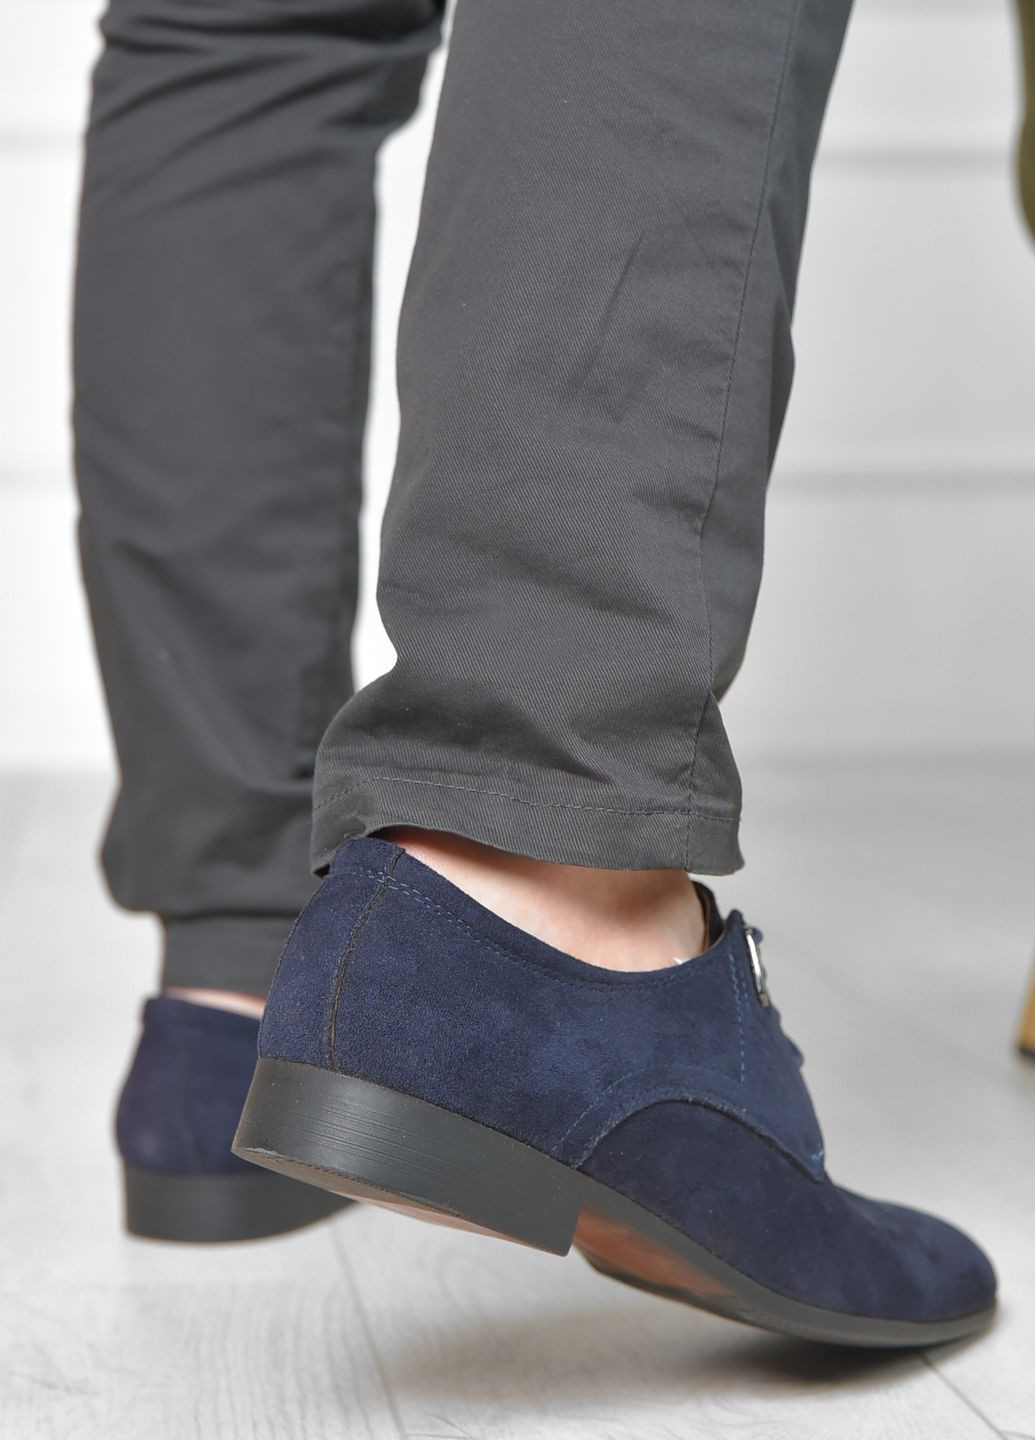 Темно-синие классические туфли мужские темно-синего цвета Let's Shop на шнурках